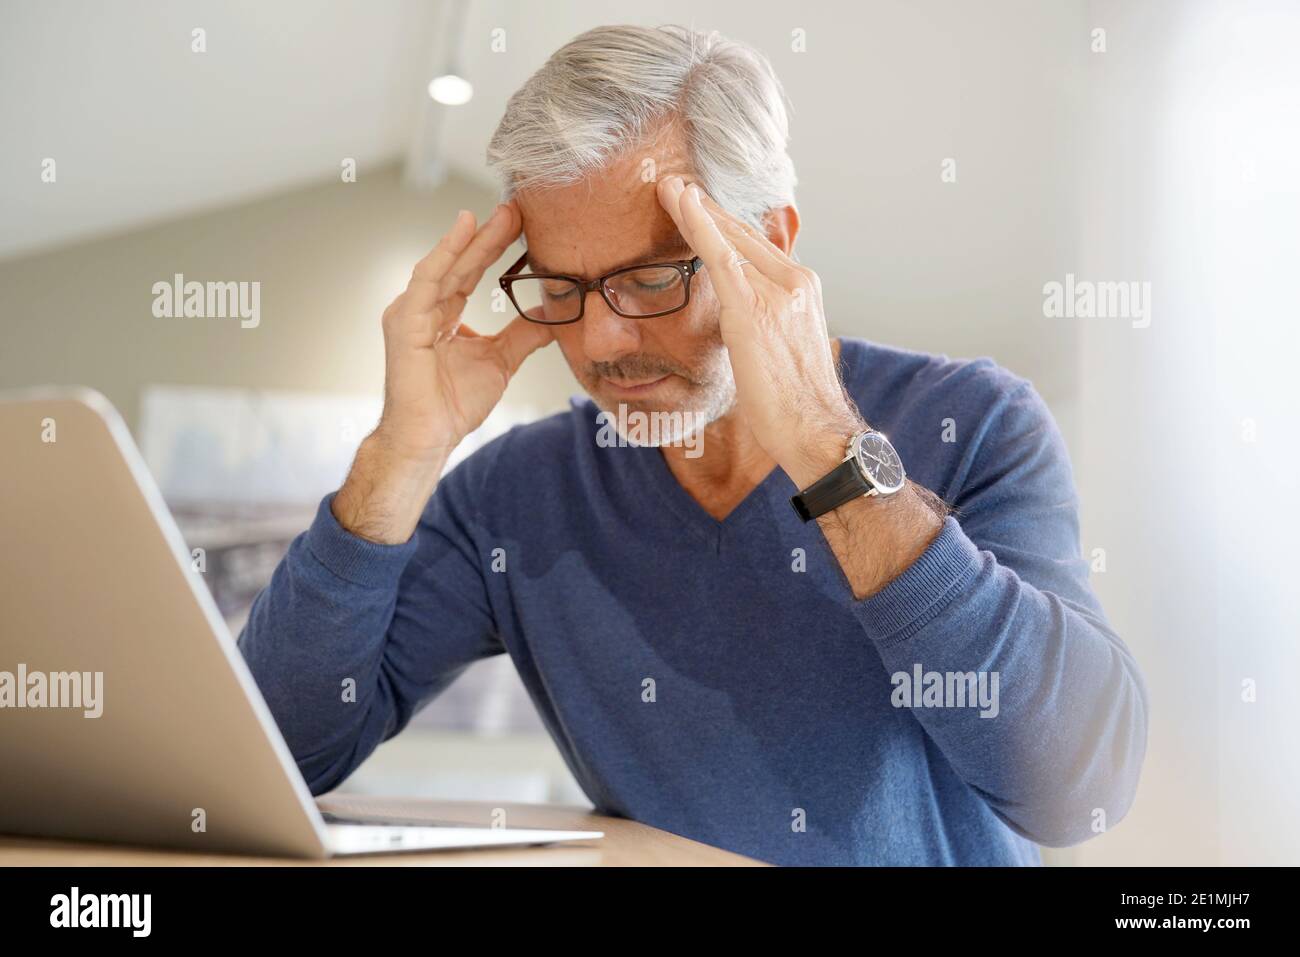 Senior man having migraine while working on laptop computer Stock Photo